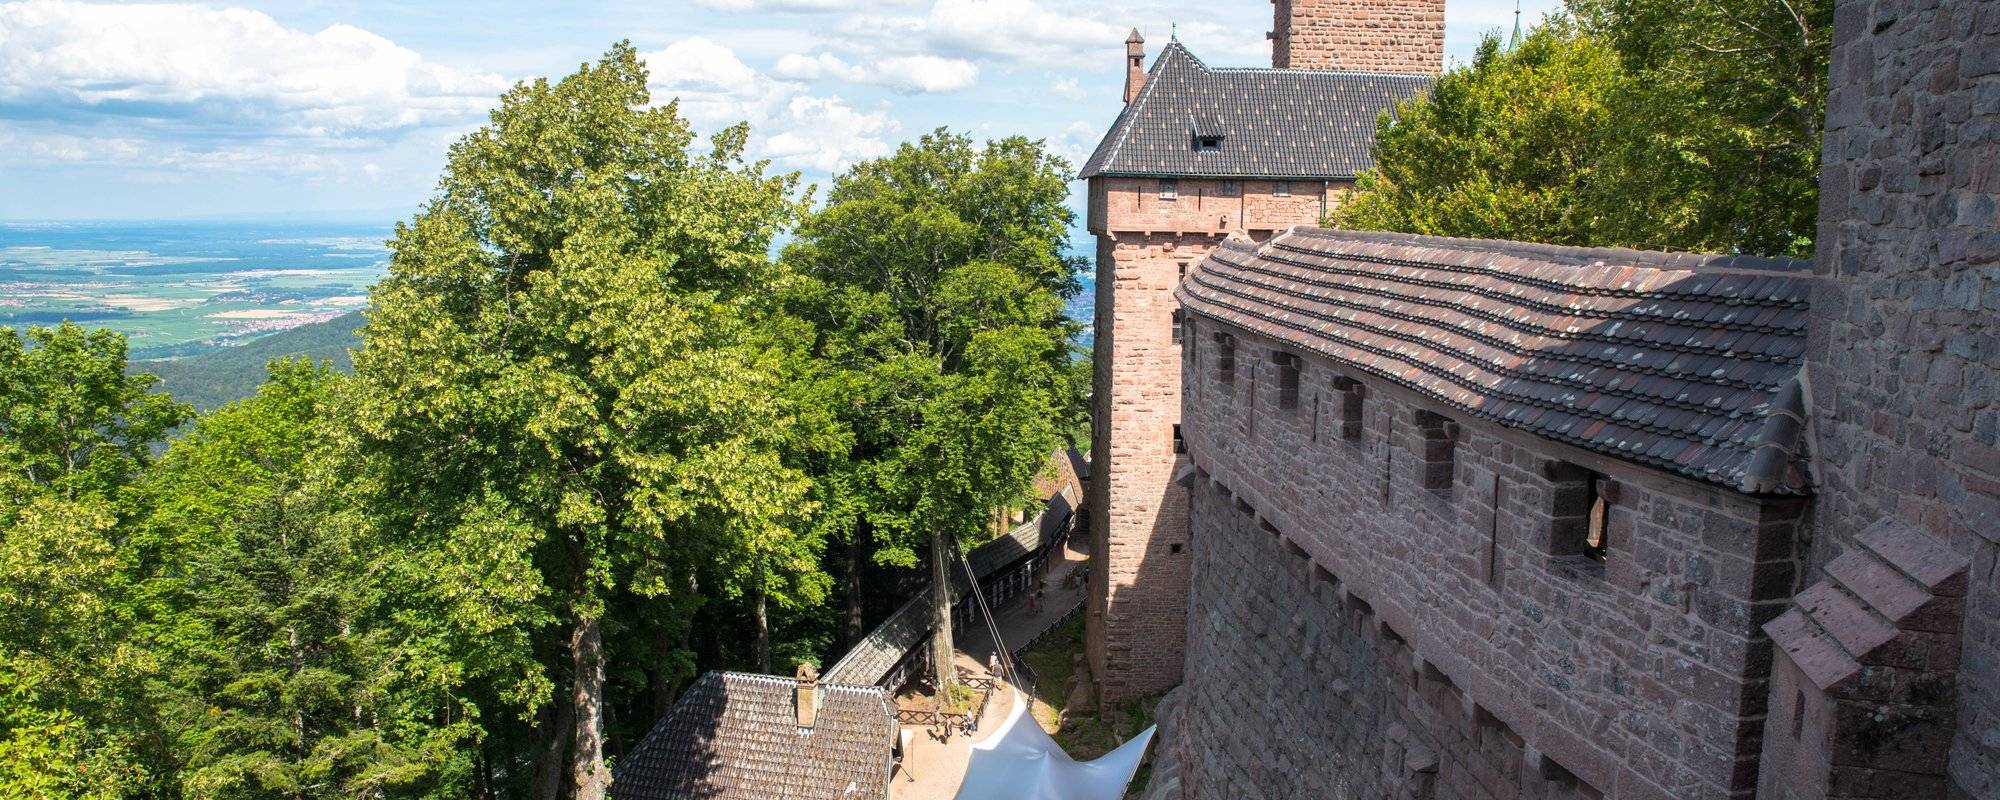 Haut-Koenigsbourg castle